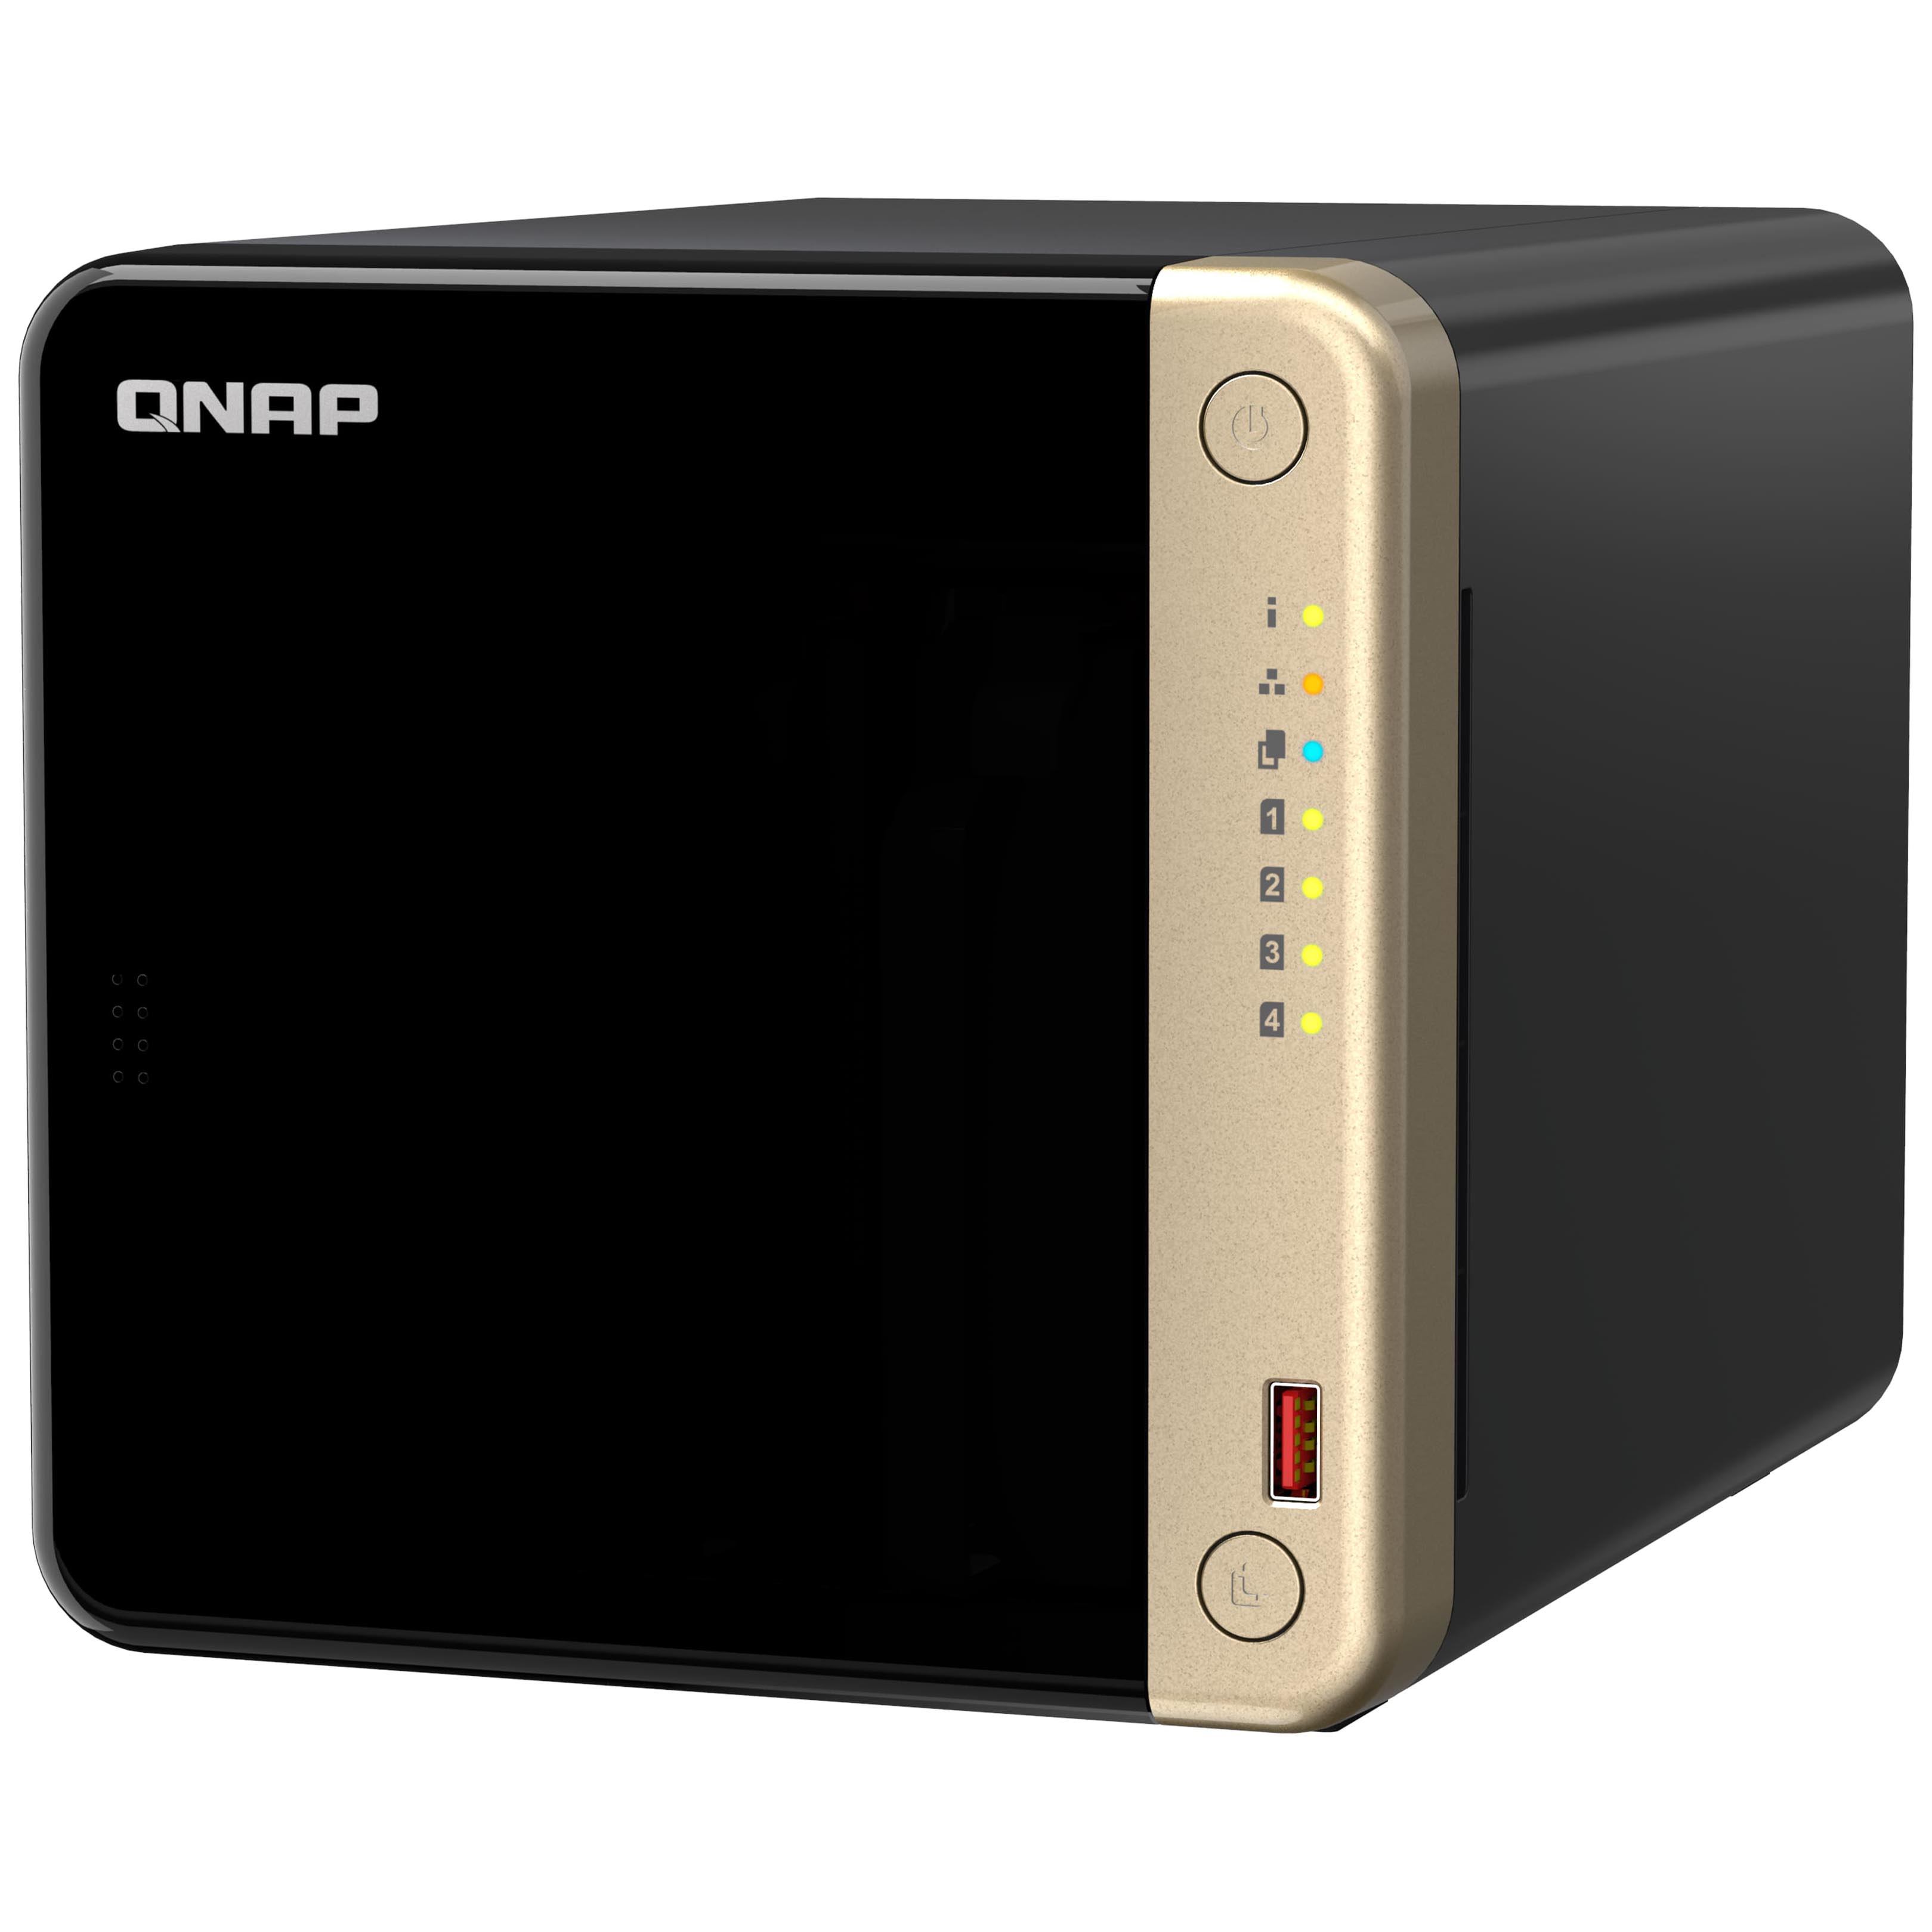 Сетевое хранилище QNAP TS-664 Nas DDR4 4 Гб, 6 отсека, без дисков, черный channel qnap d4 pro rev b nas 4 tray w o hdd quad core intel celeron j1900 2 0 2 42ghz 2gb up to 8gb hdmi port 4xusb 2xgb lan